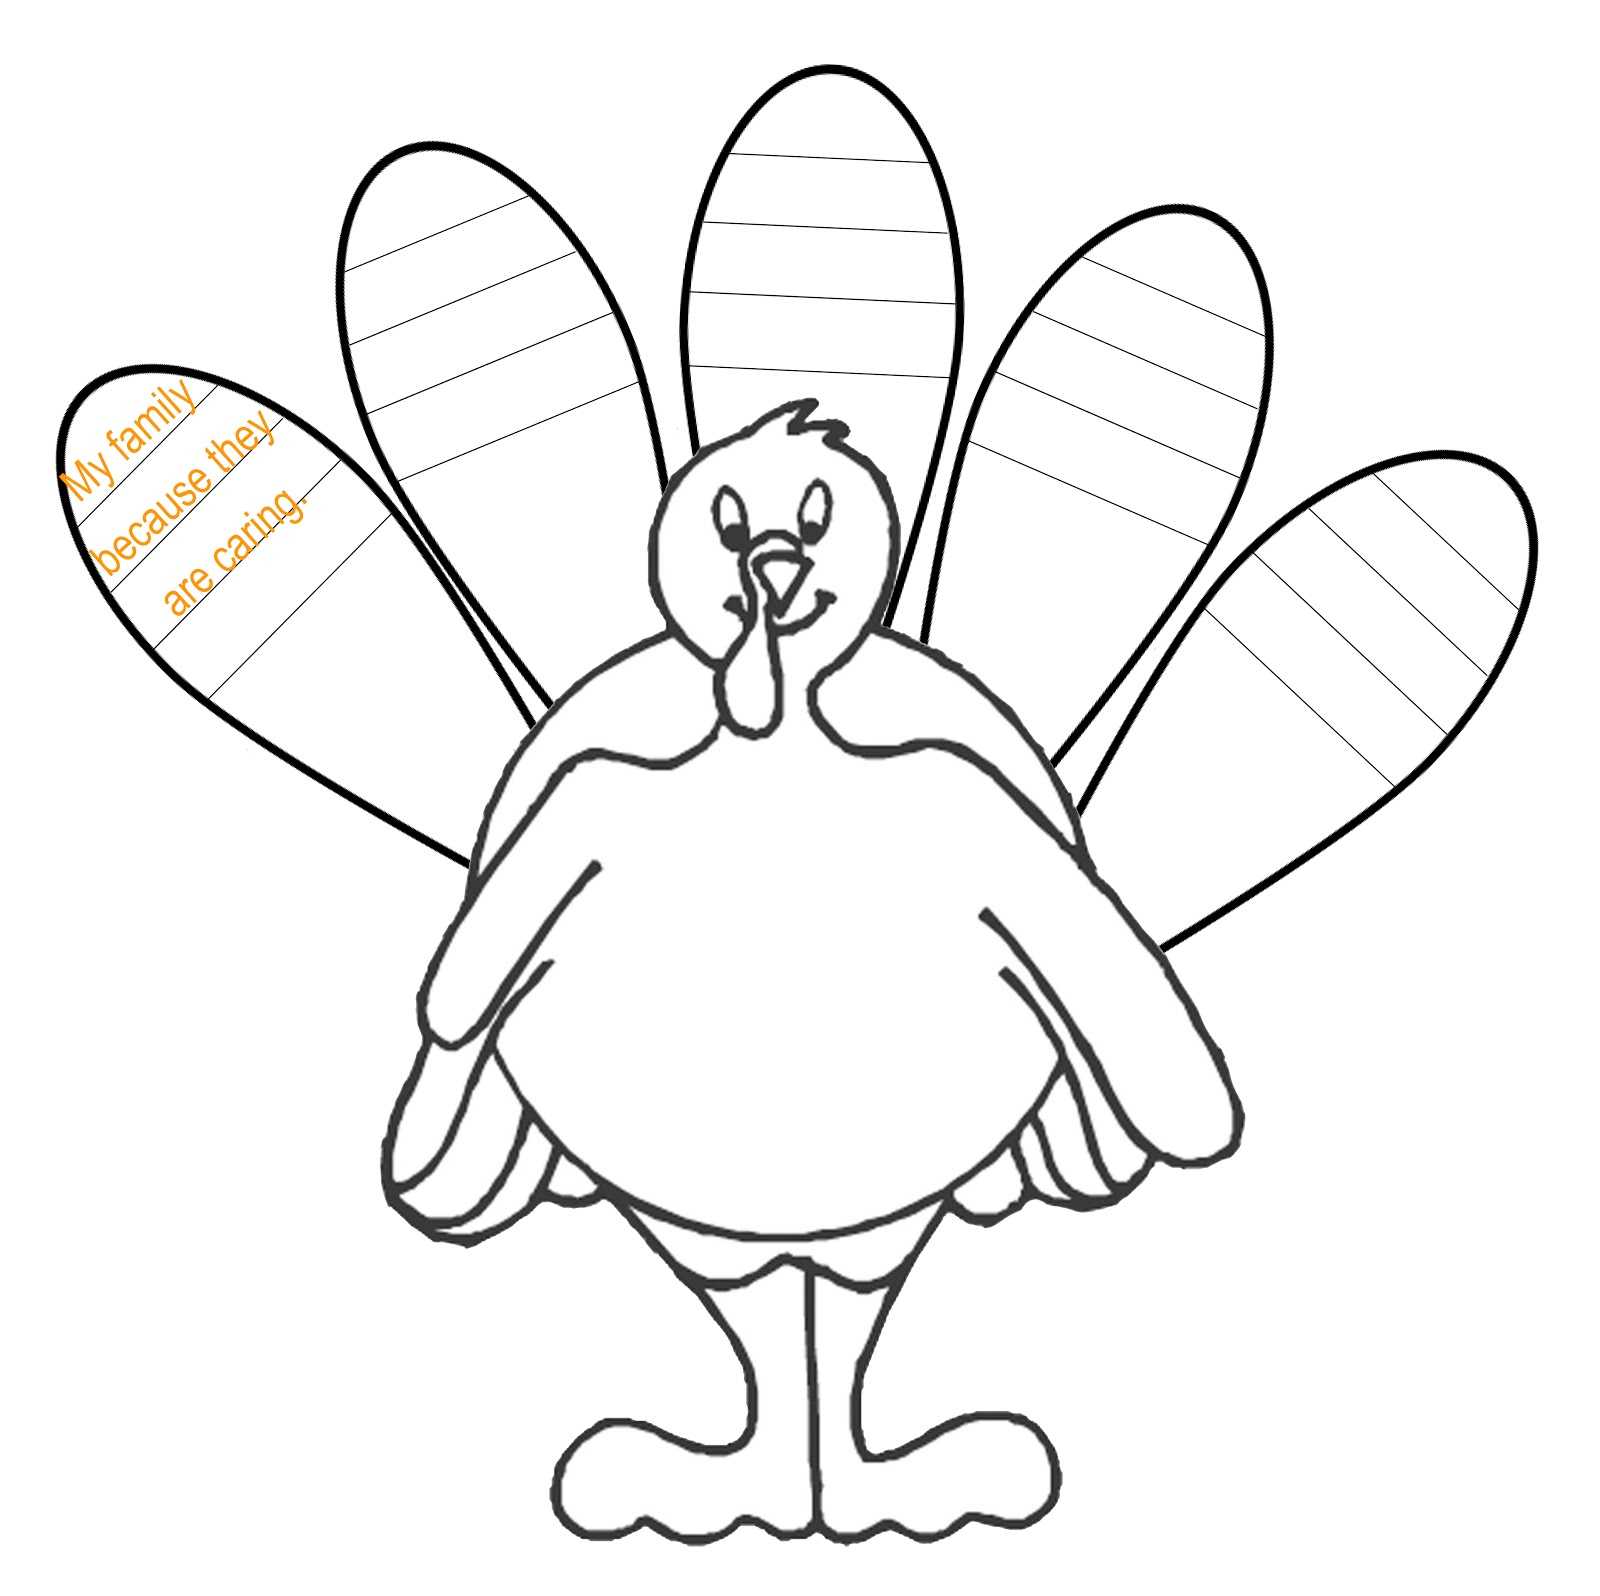 Blank Turkey Template - Dalep.midnightpig.co Pertaining To Blank Turkey Template